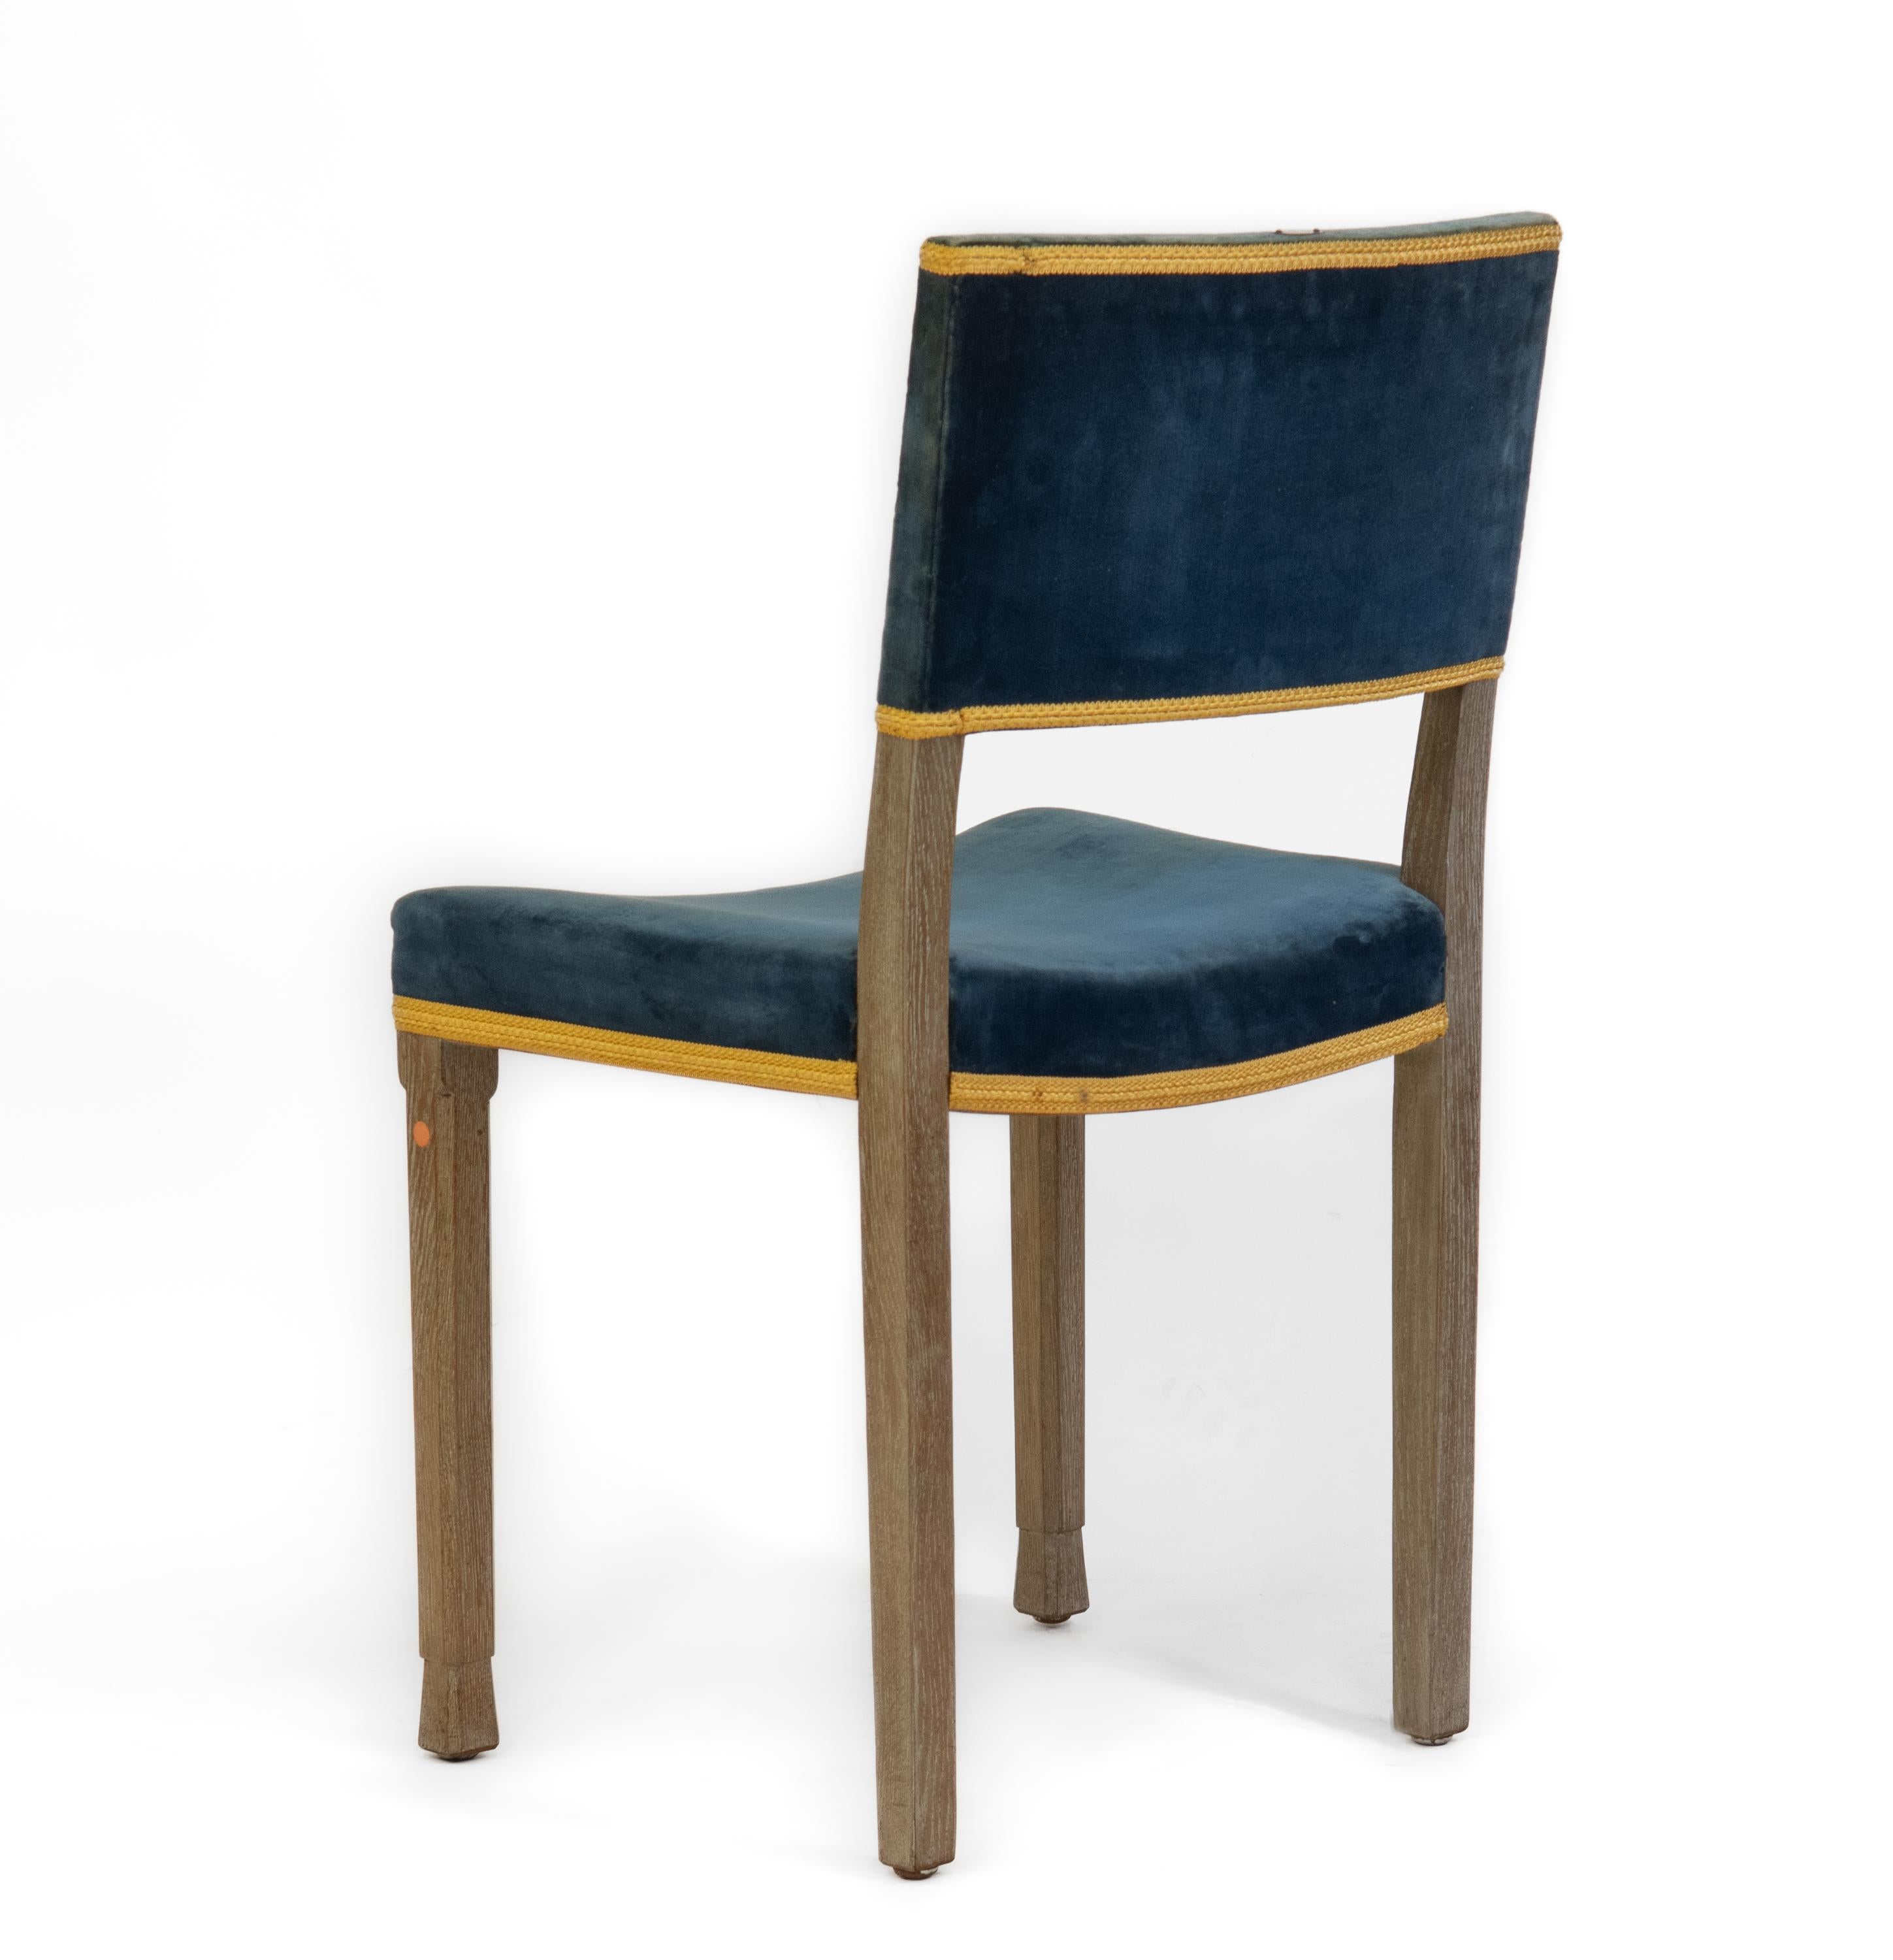 Hand-Crafted Original Queen Elizabeth II Coronation Chair 1953 Excellent Example